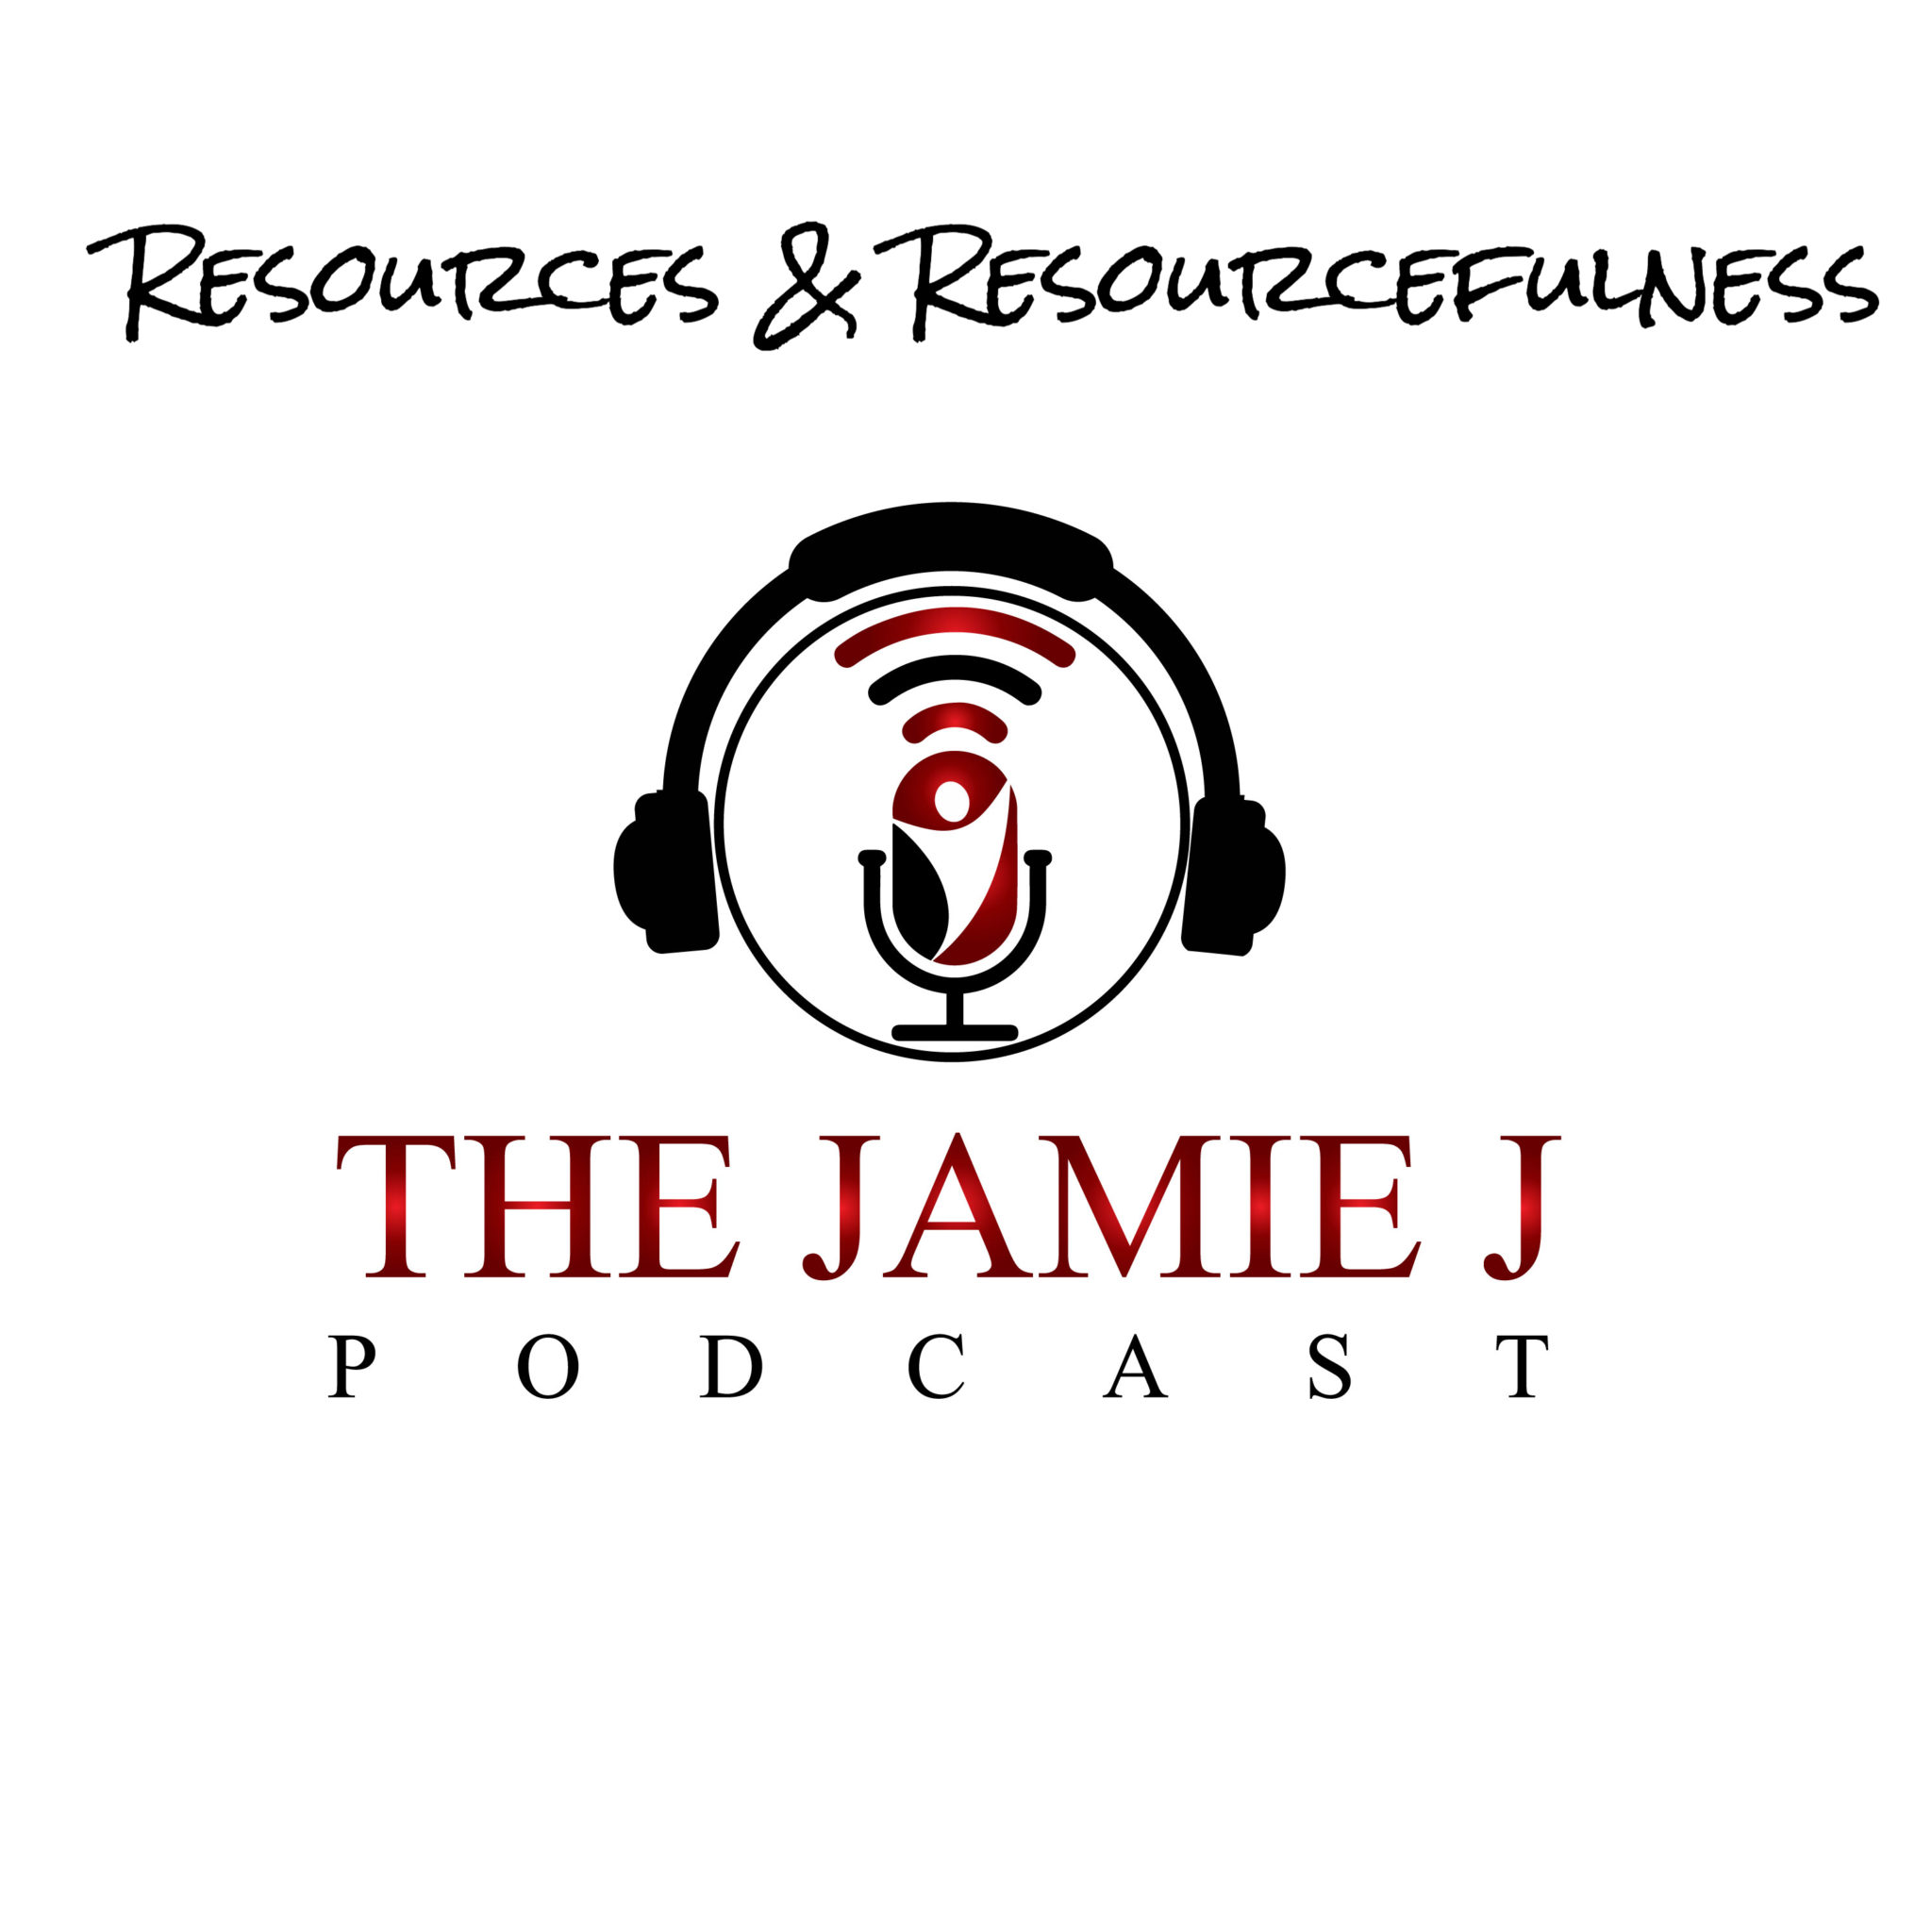 The Jamie J Podcast - Resources & Resourcefulness